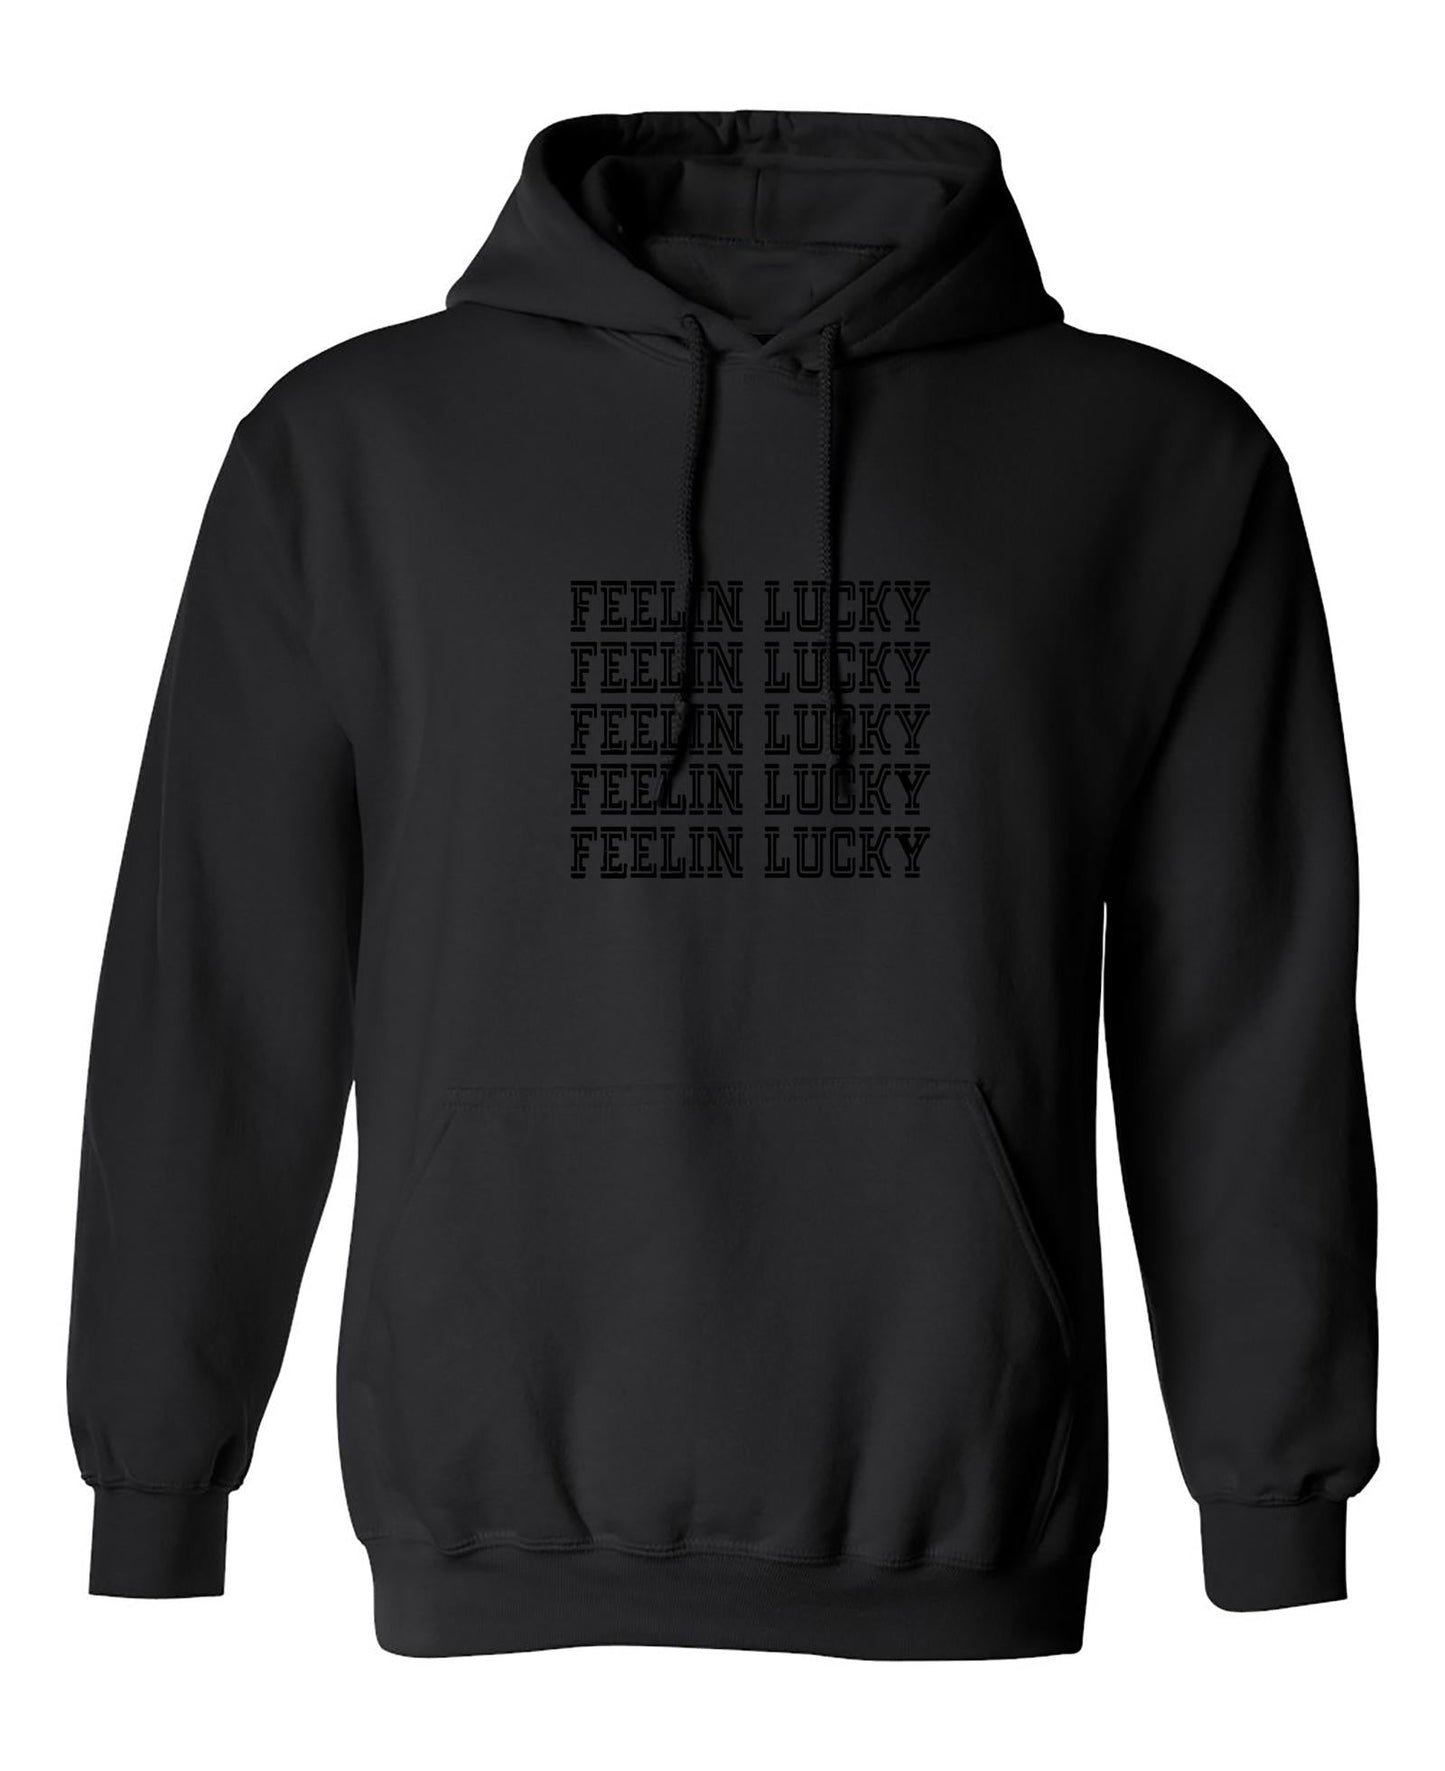 Funny T-Shirts design "FEELIN LUCKY"